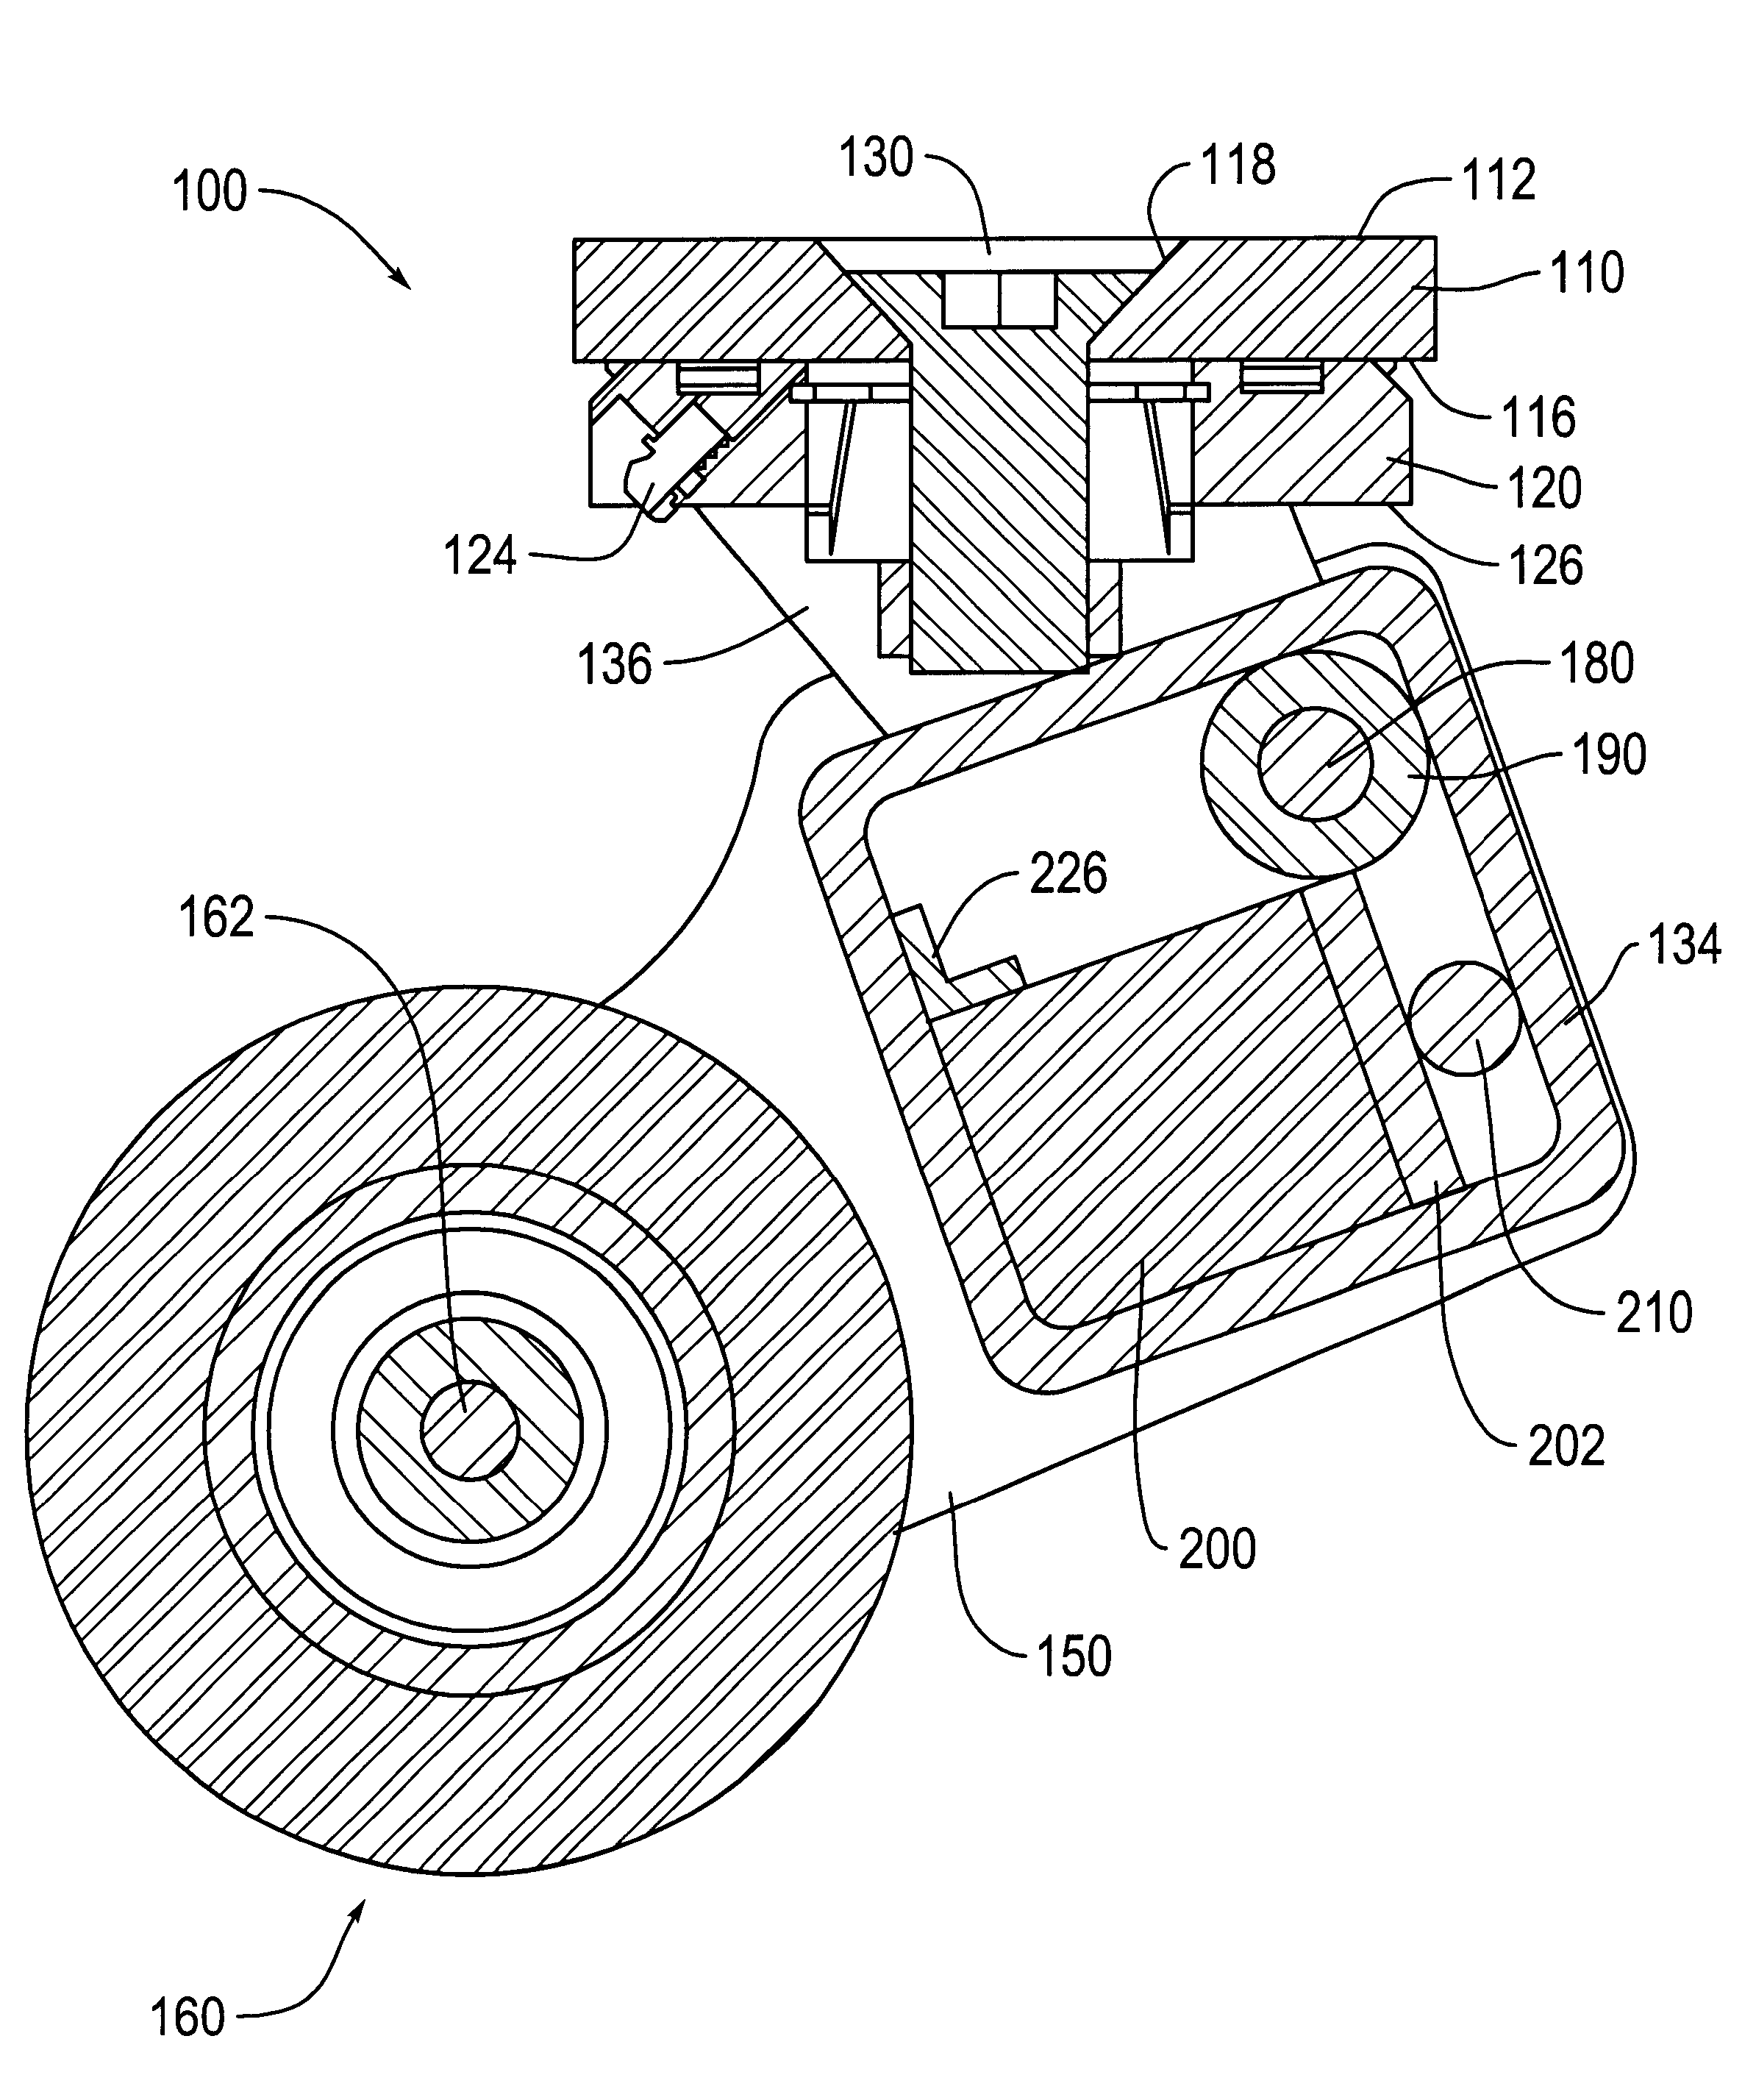 Industrial caster wheel with elastomeric spring/damper member